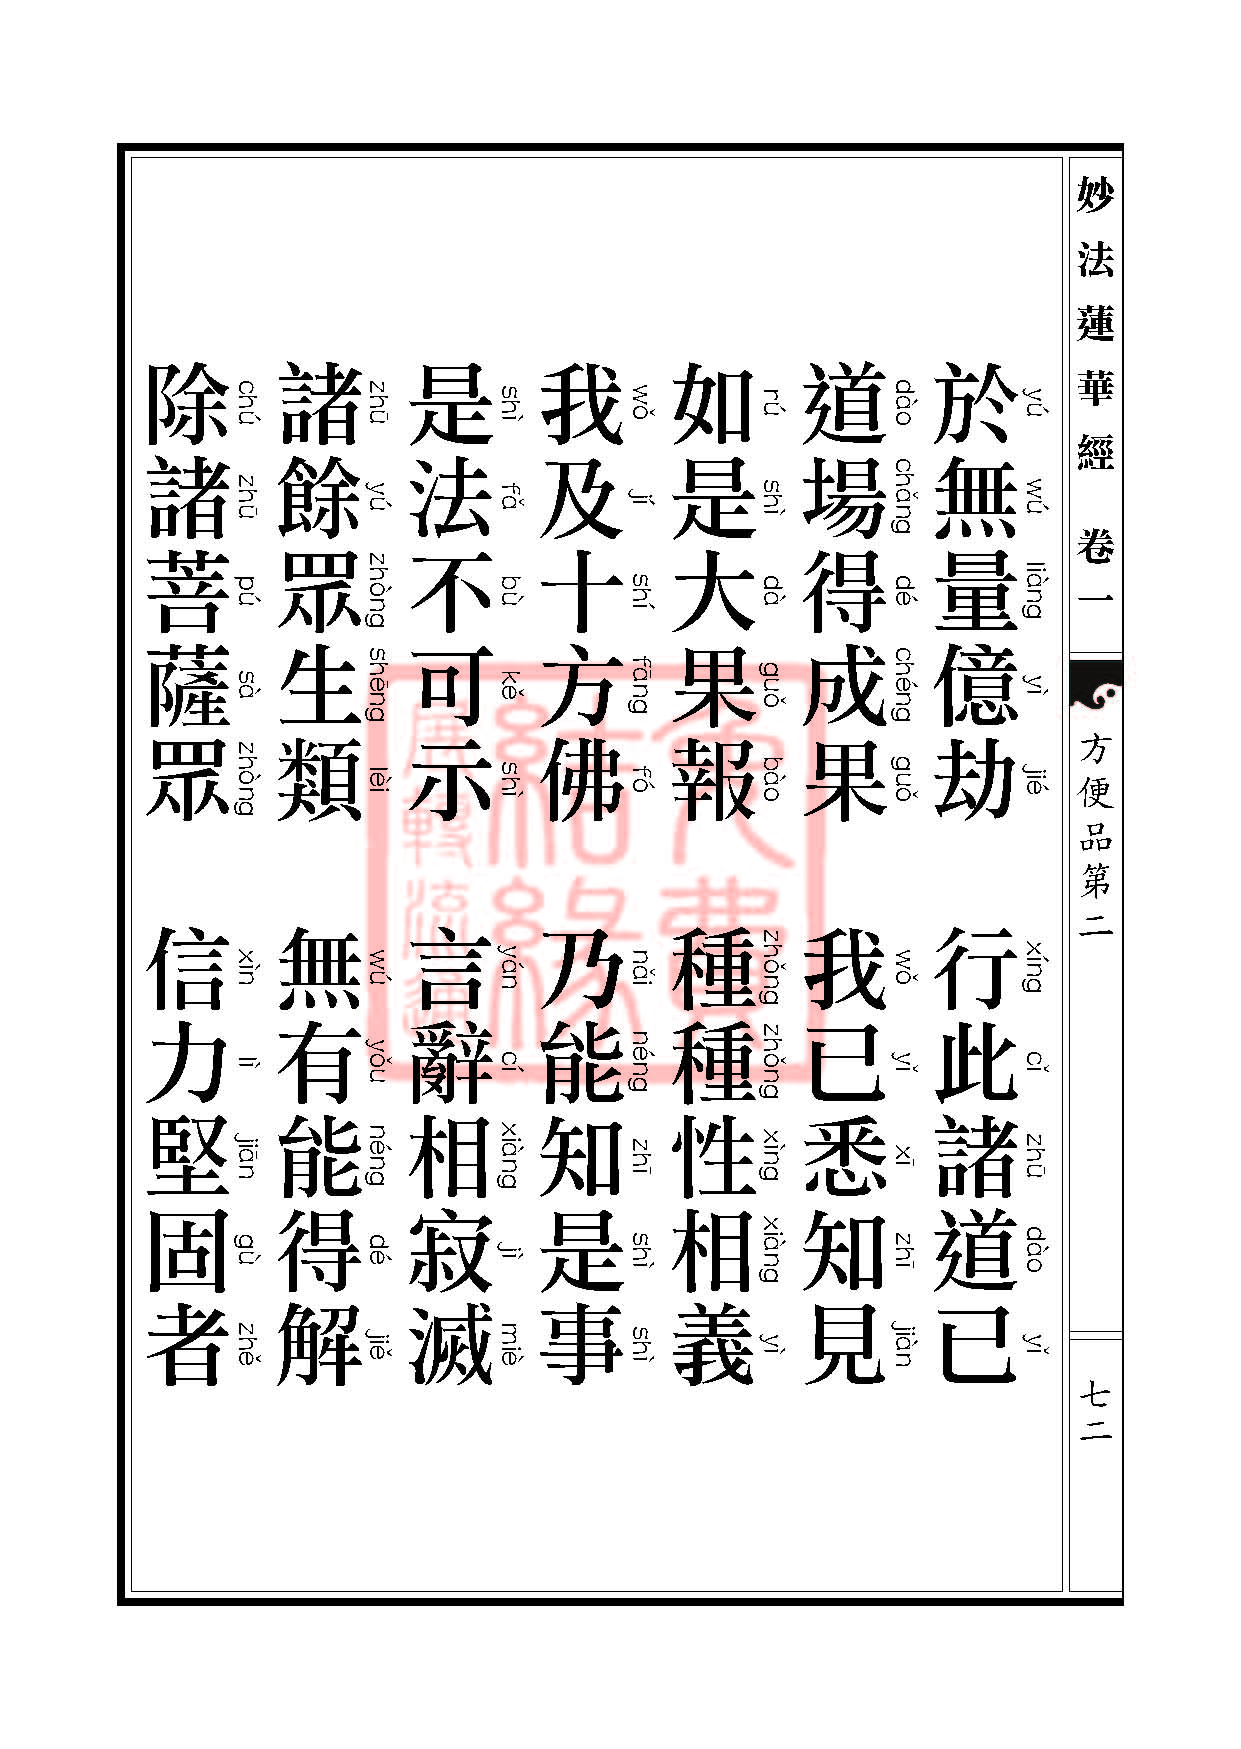 Book_FHJ_HK-A6-PY_Web_ҳ_072.jpg